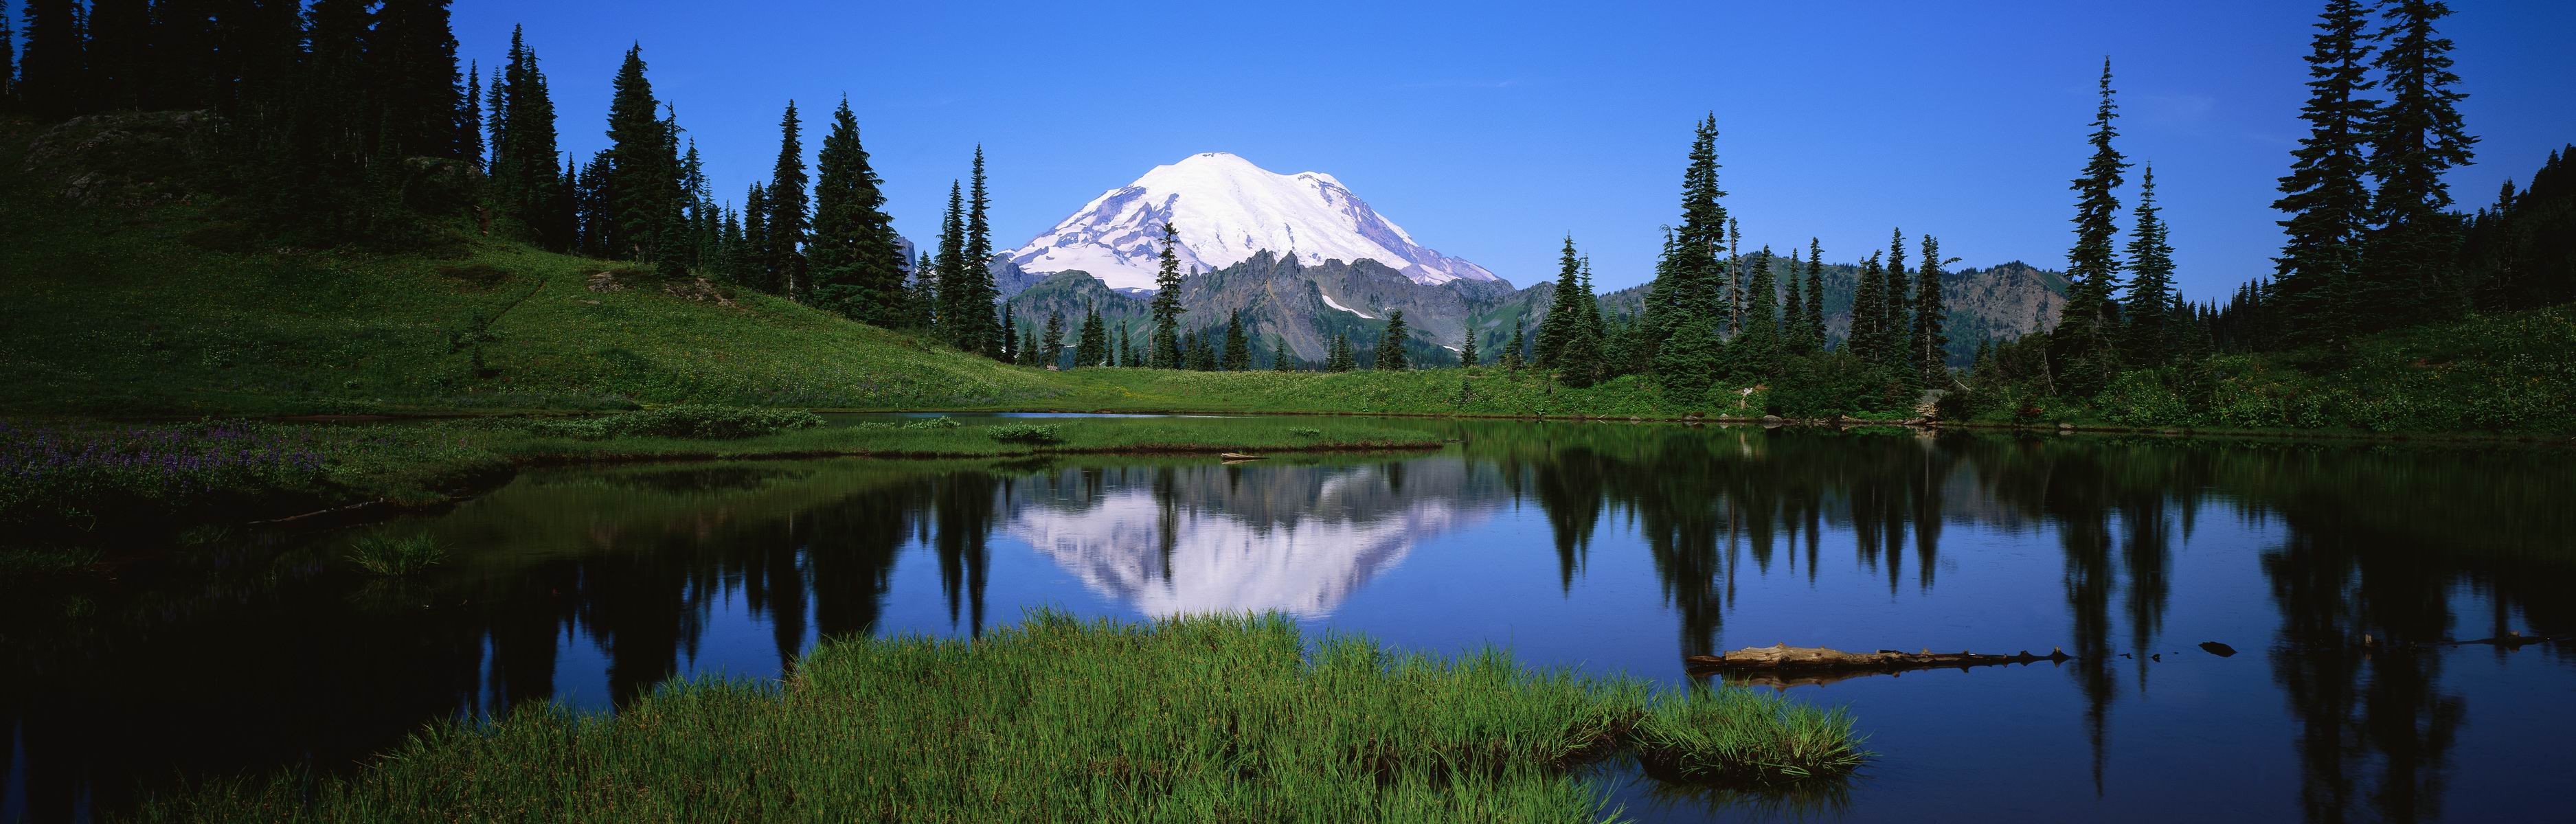 General 3750x1200 landscape water reflection mountains Mount Rainier nature USA Washington State volcano